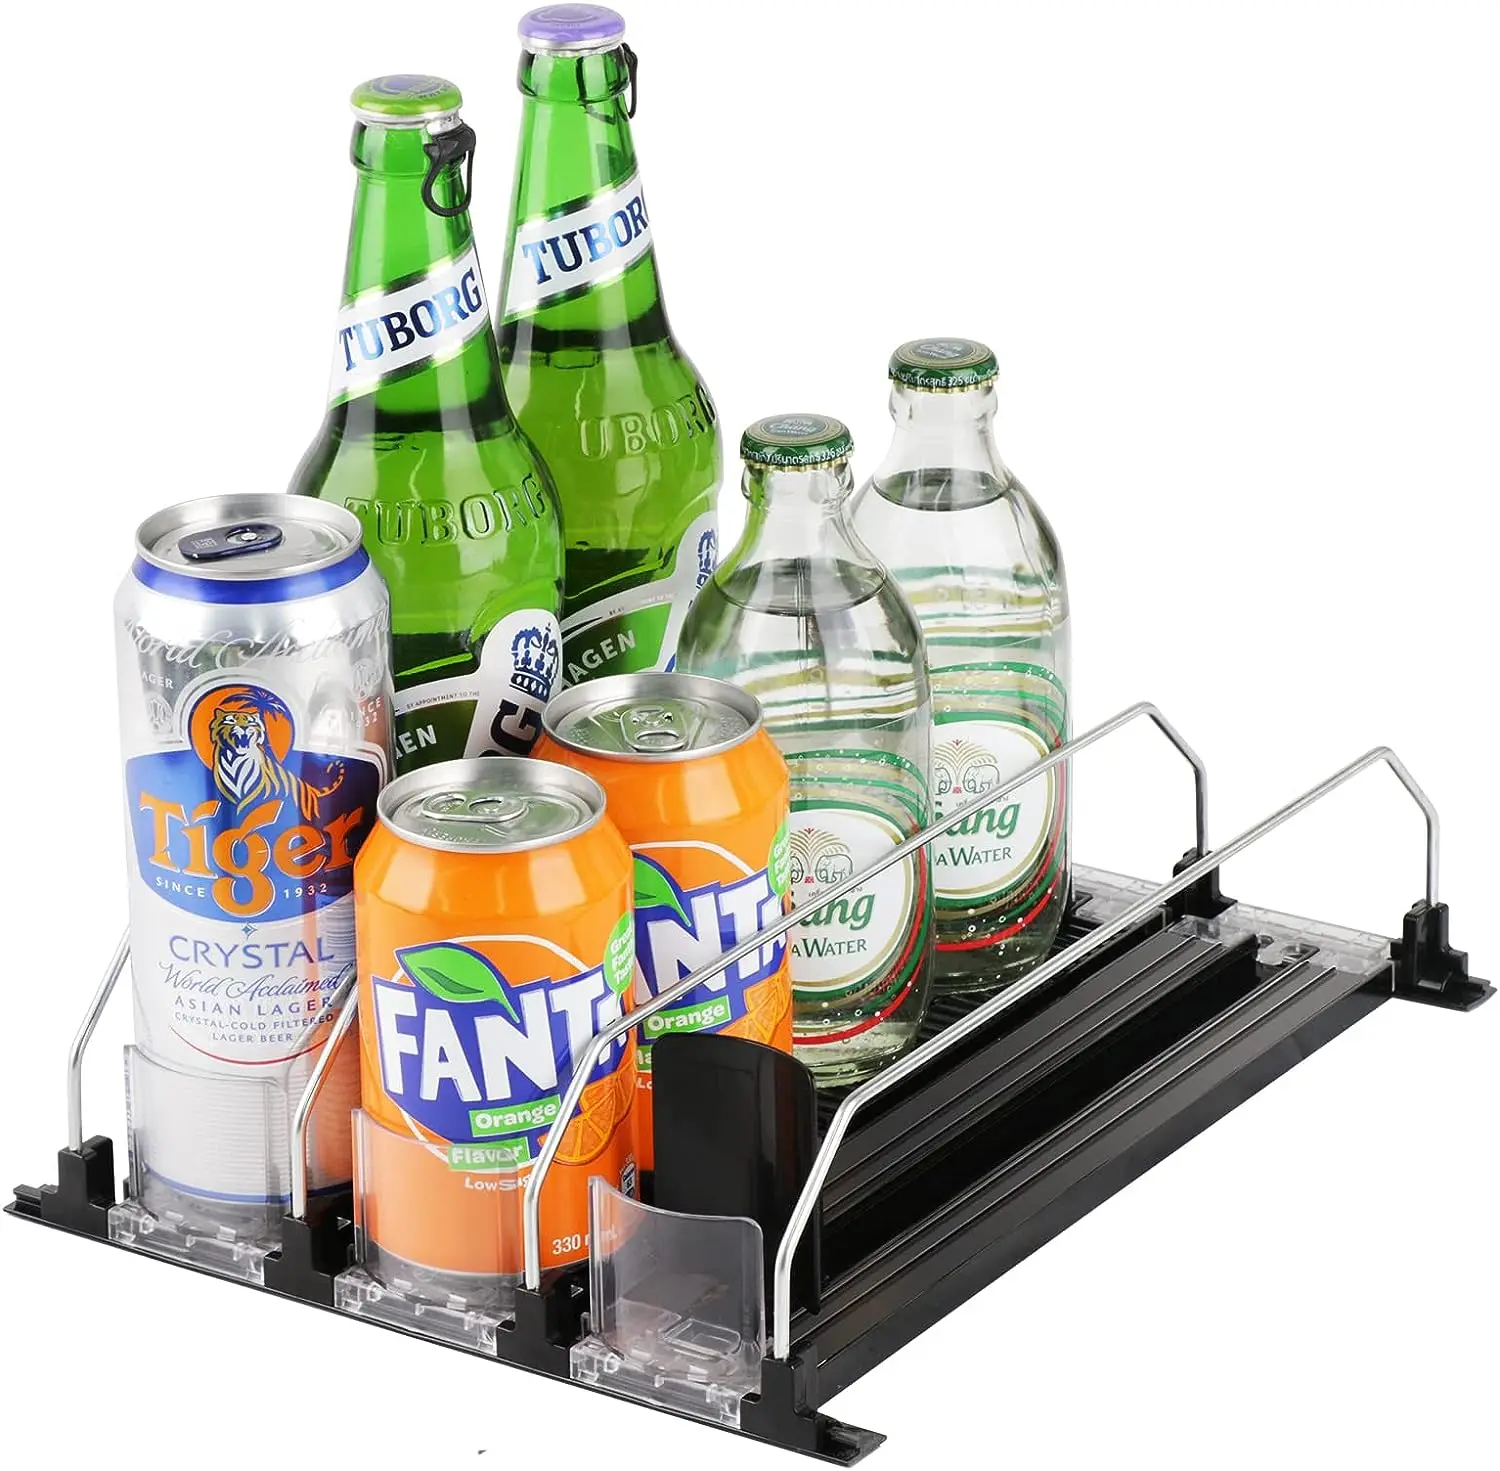 

Beverage Can Organizer Pusher Glide Rack Cola Pop Soda Beer Can Water Bottle Storage Dispenser for Refrigerator